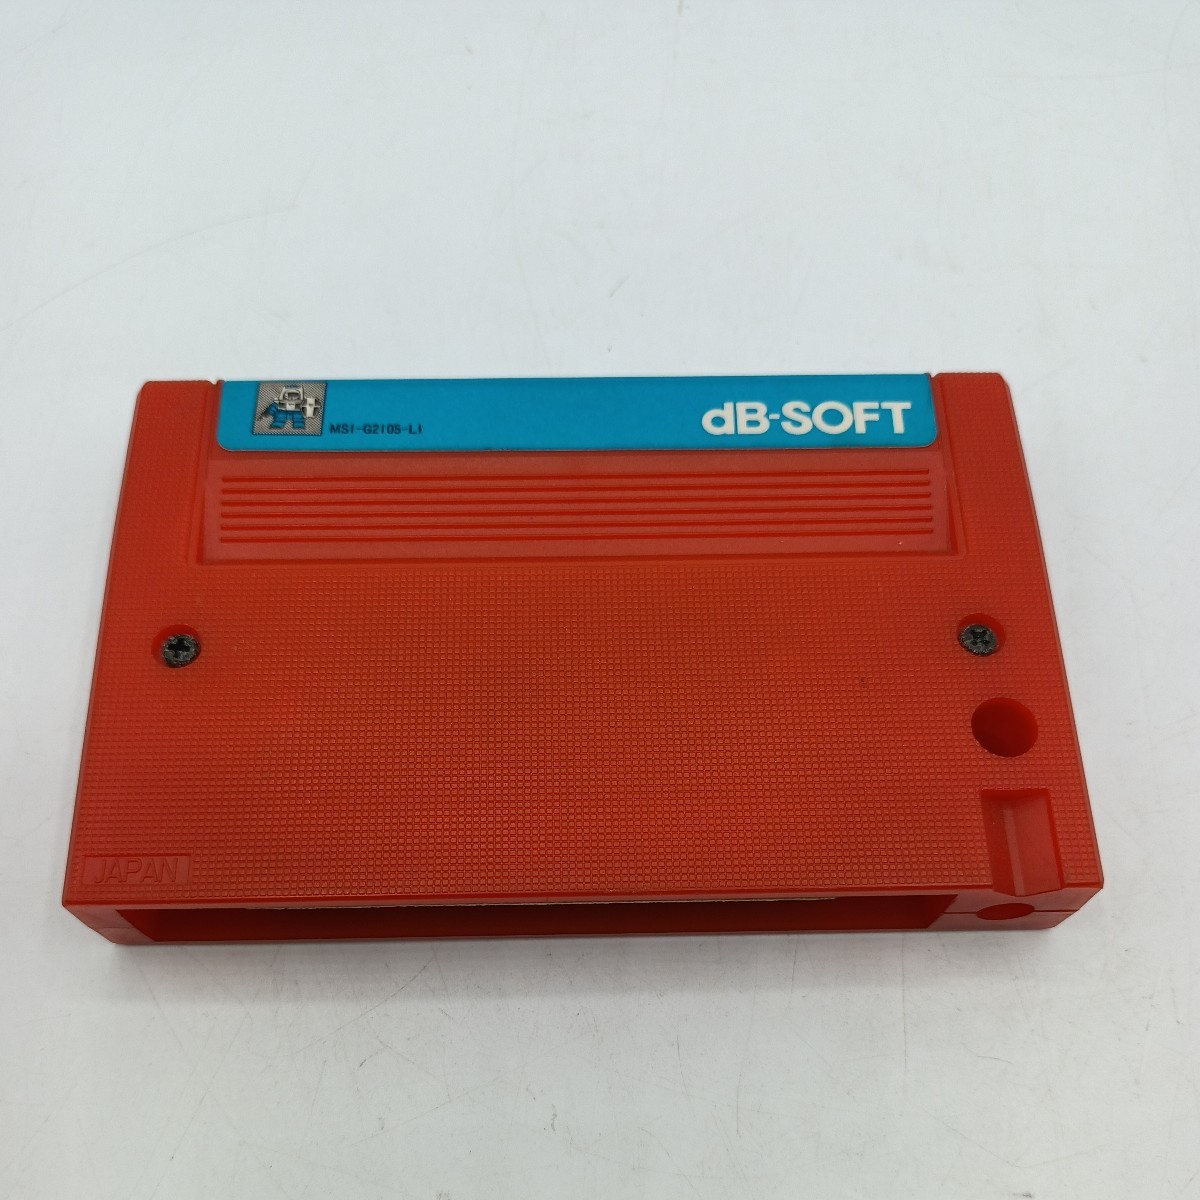 I2105 ☆激レア MSX ゲームカセット「ヴォルガード」 VOLGUARD ソフト